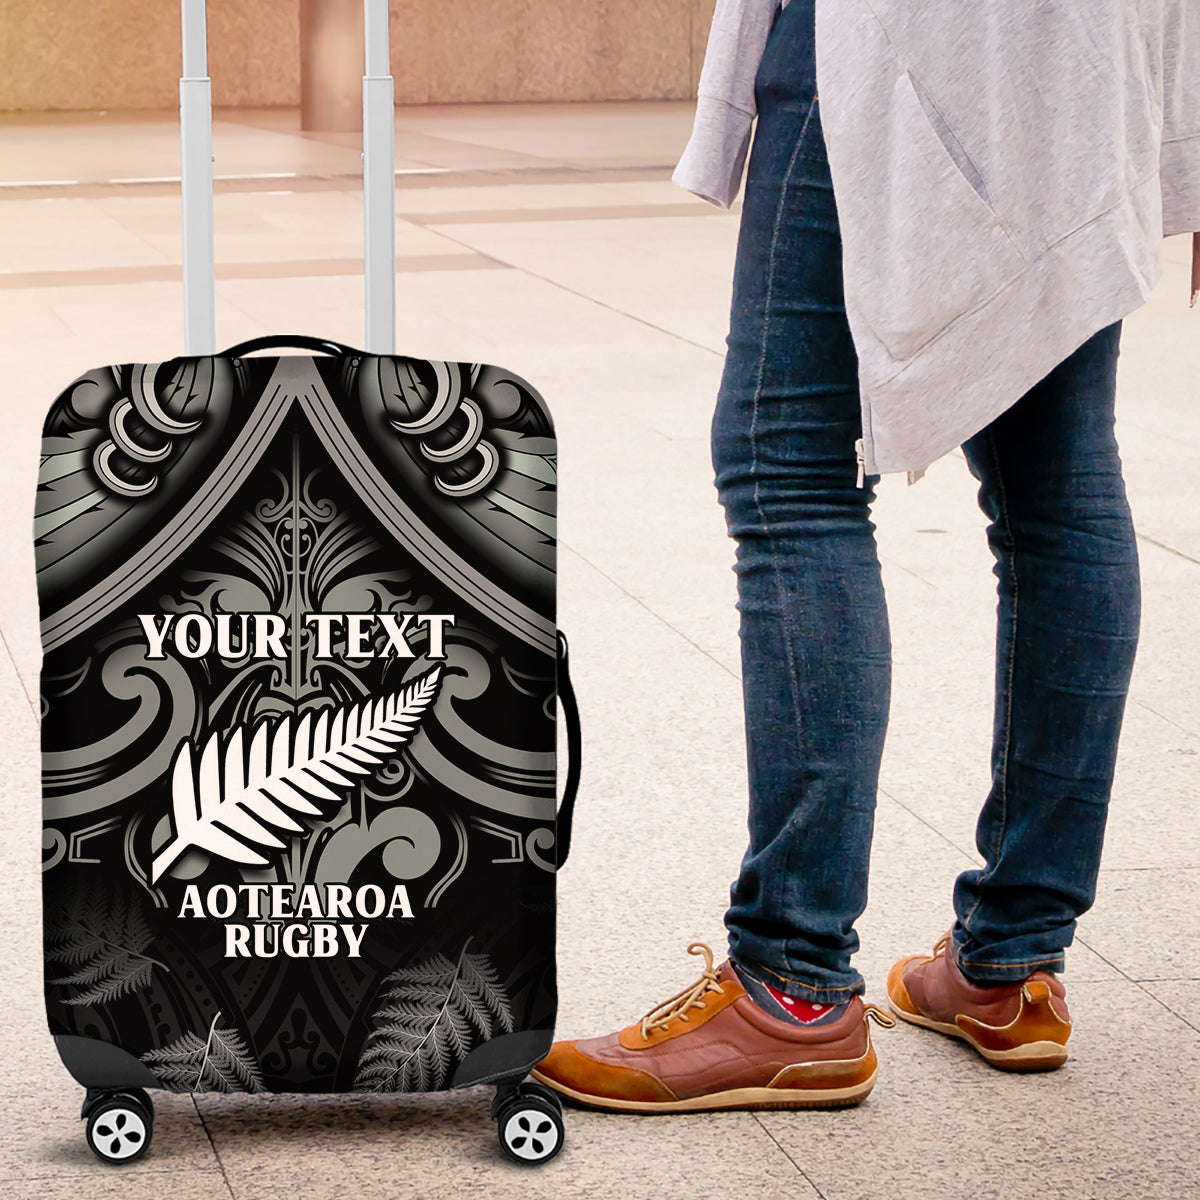 Custom New Zealand Silver Fern Rugby Luggage Cover All Black Since 1892 Aotearoa Moko Maori